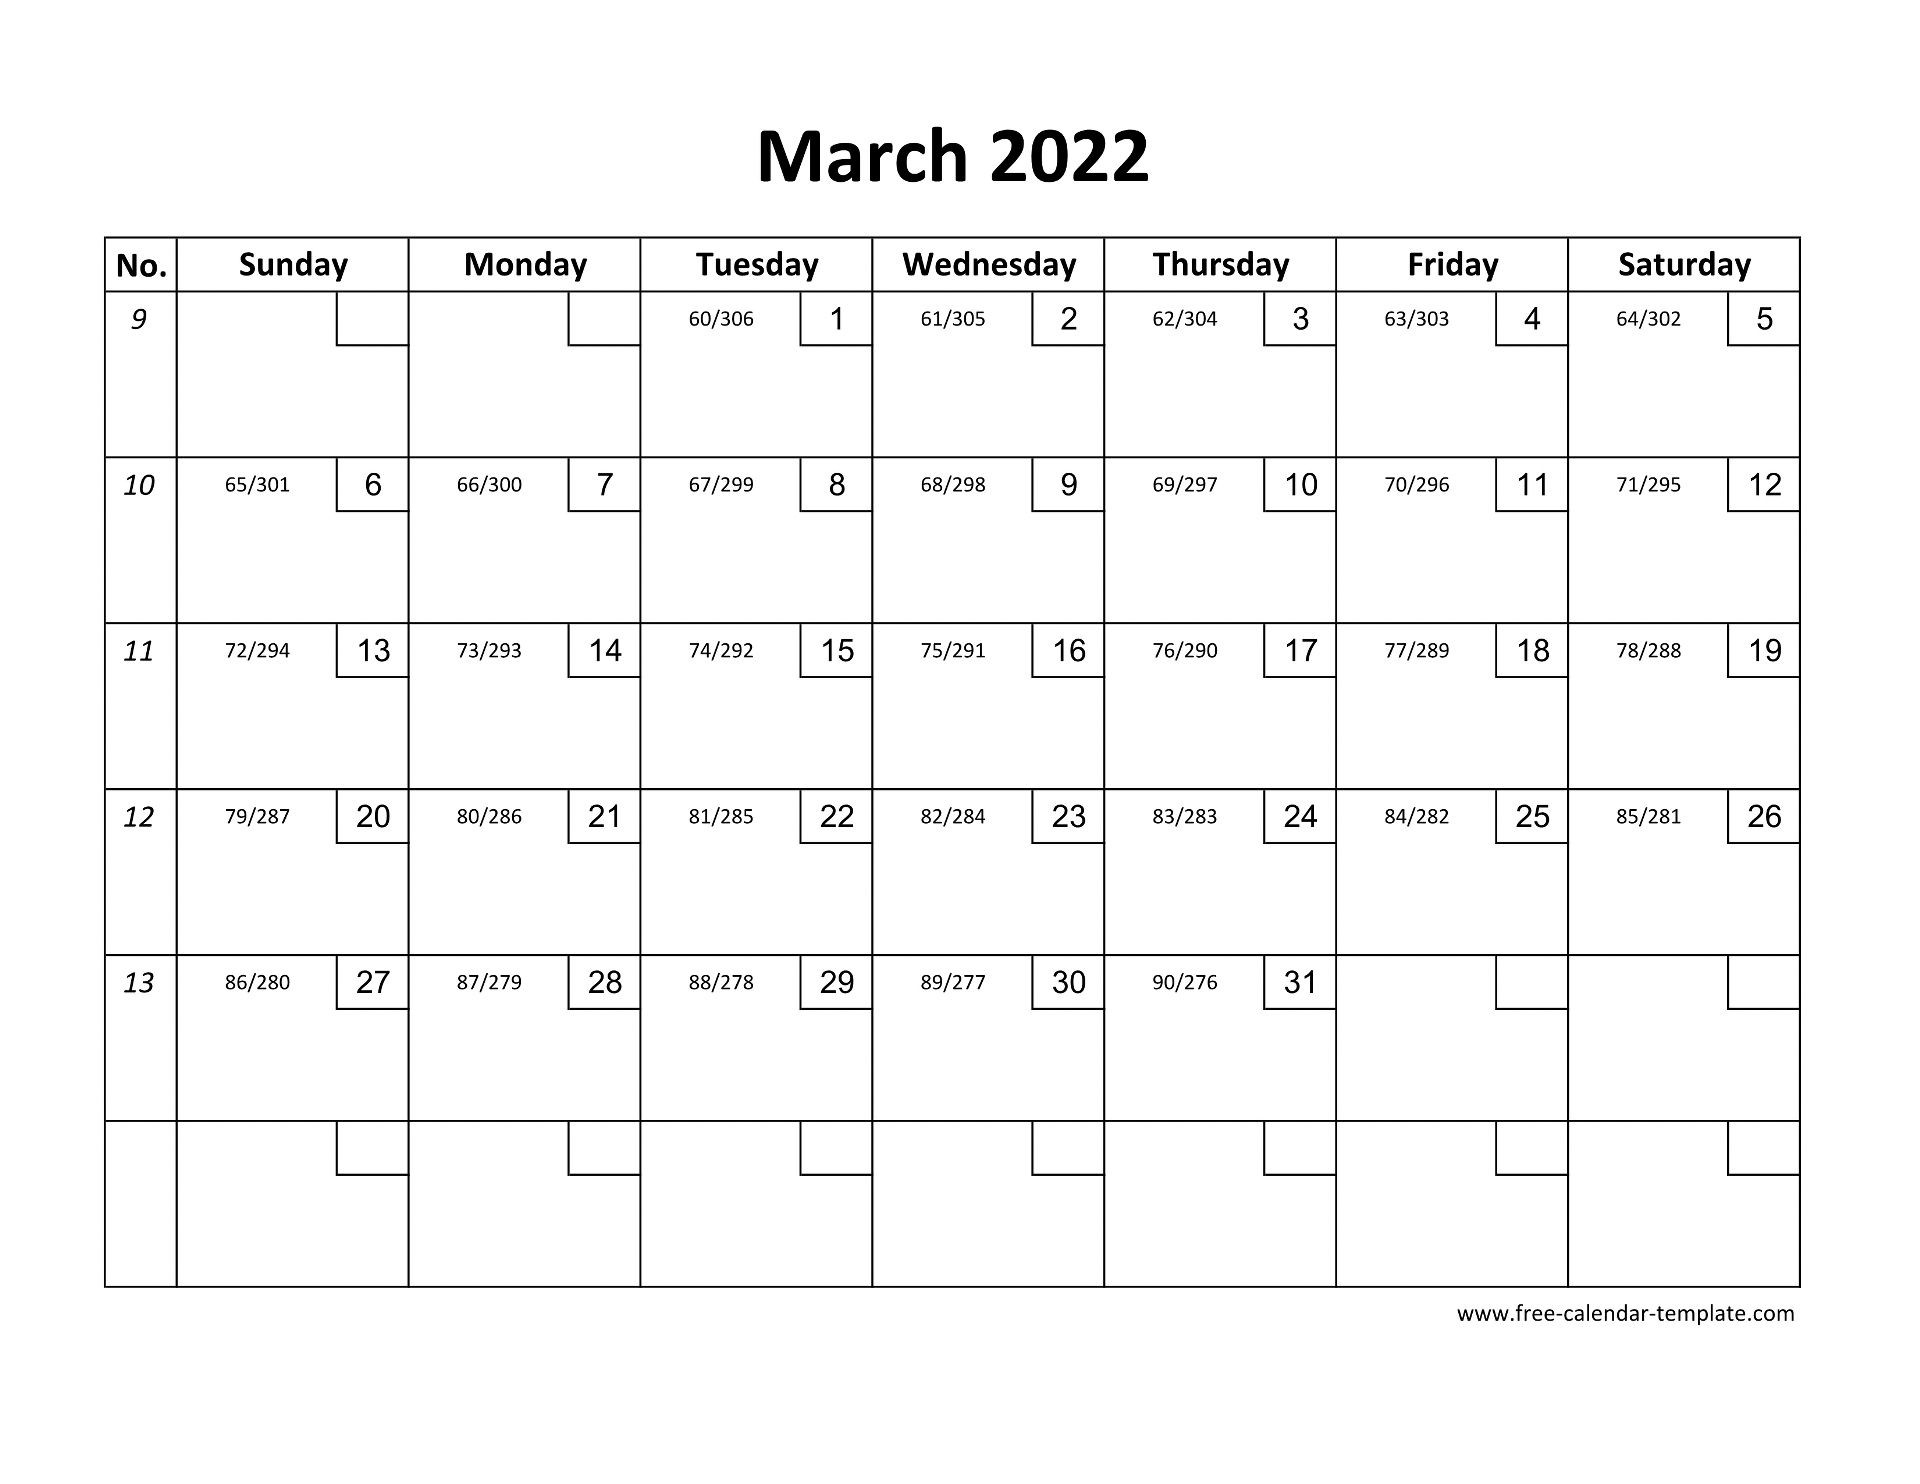 March 2022 Free Calendar Tempplate | Free-Calendar  April 2022 To March 2022 Calendar Excel